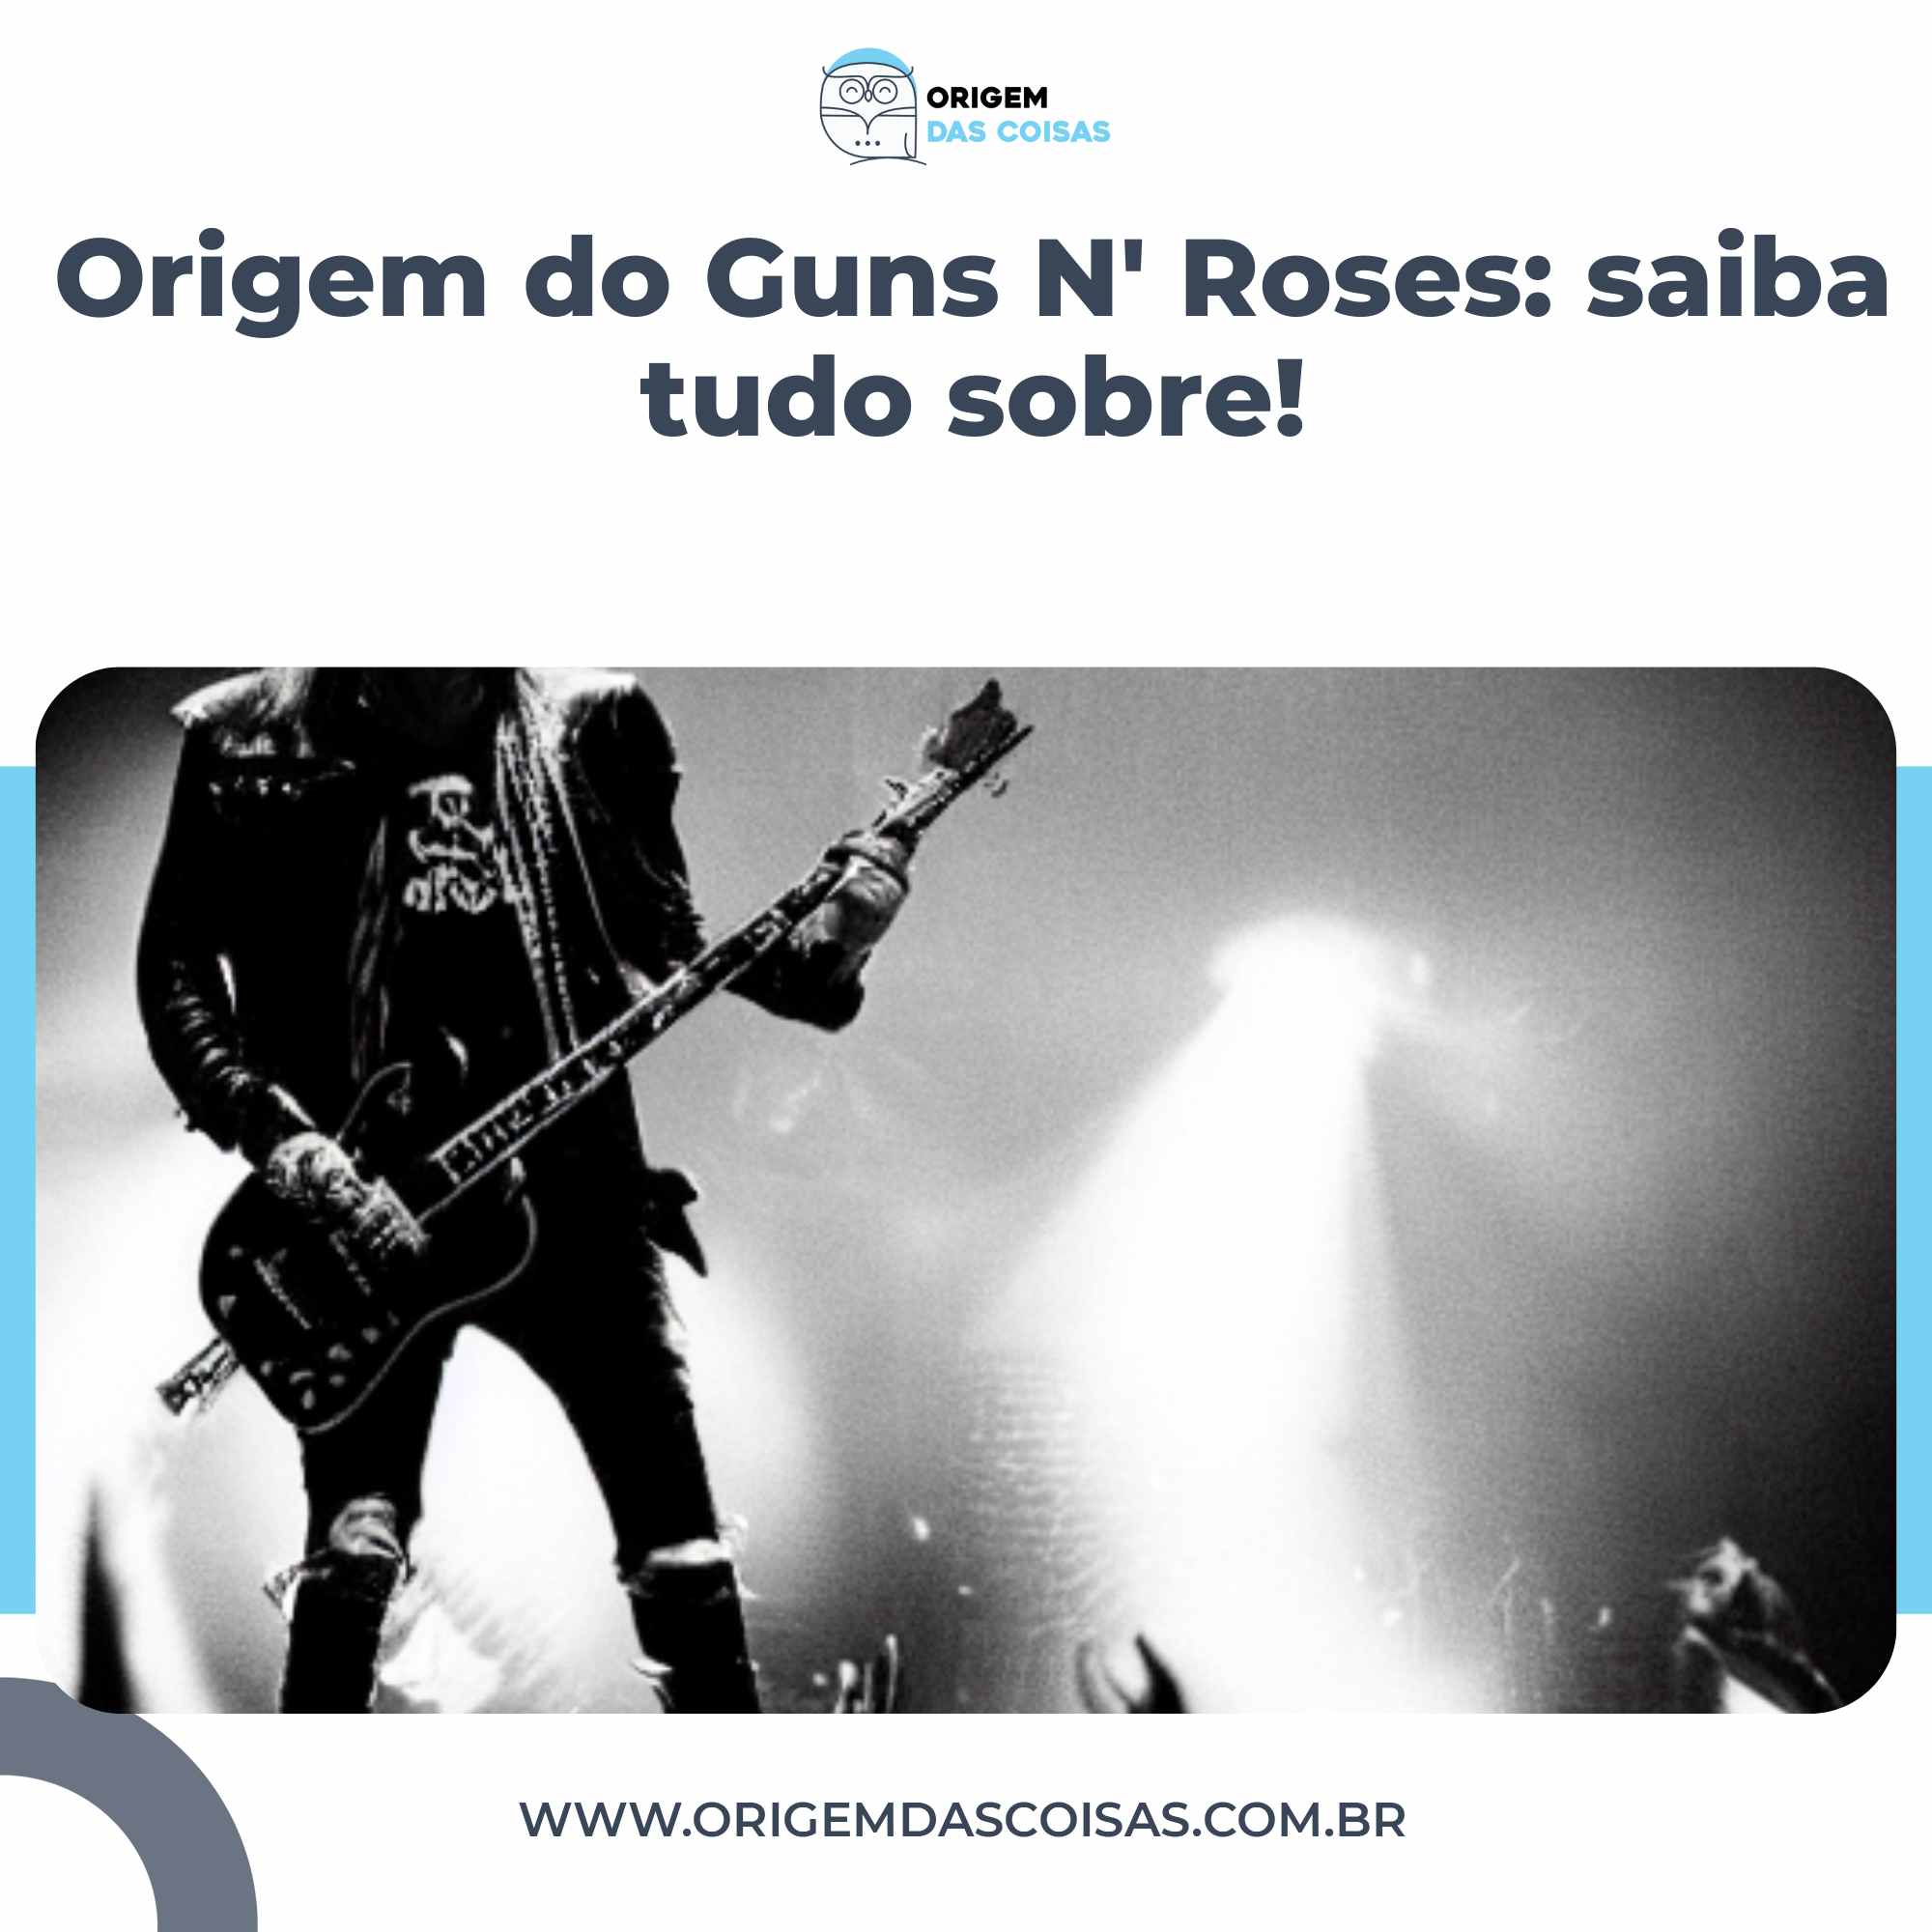 Origem do Guns N' Roses saiba tudo sobre!